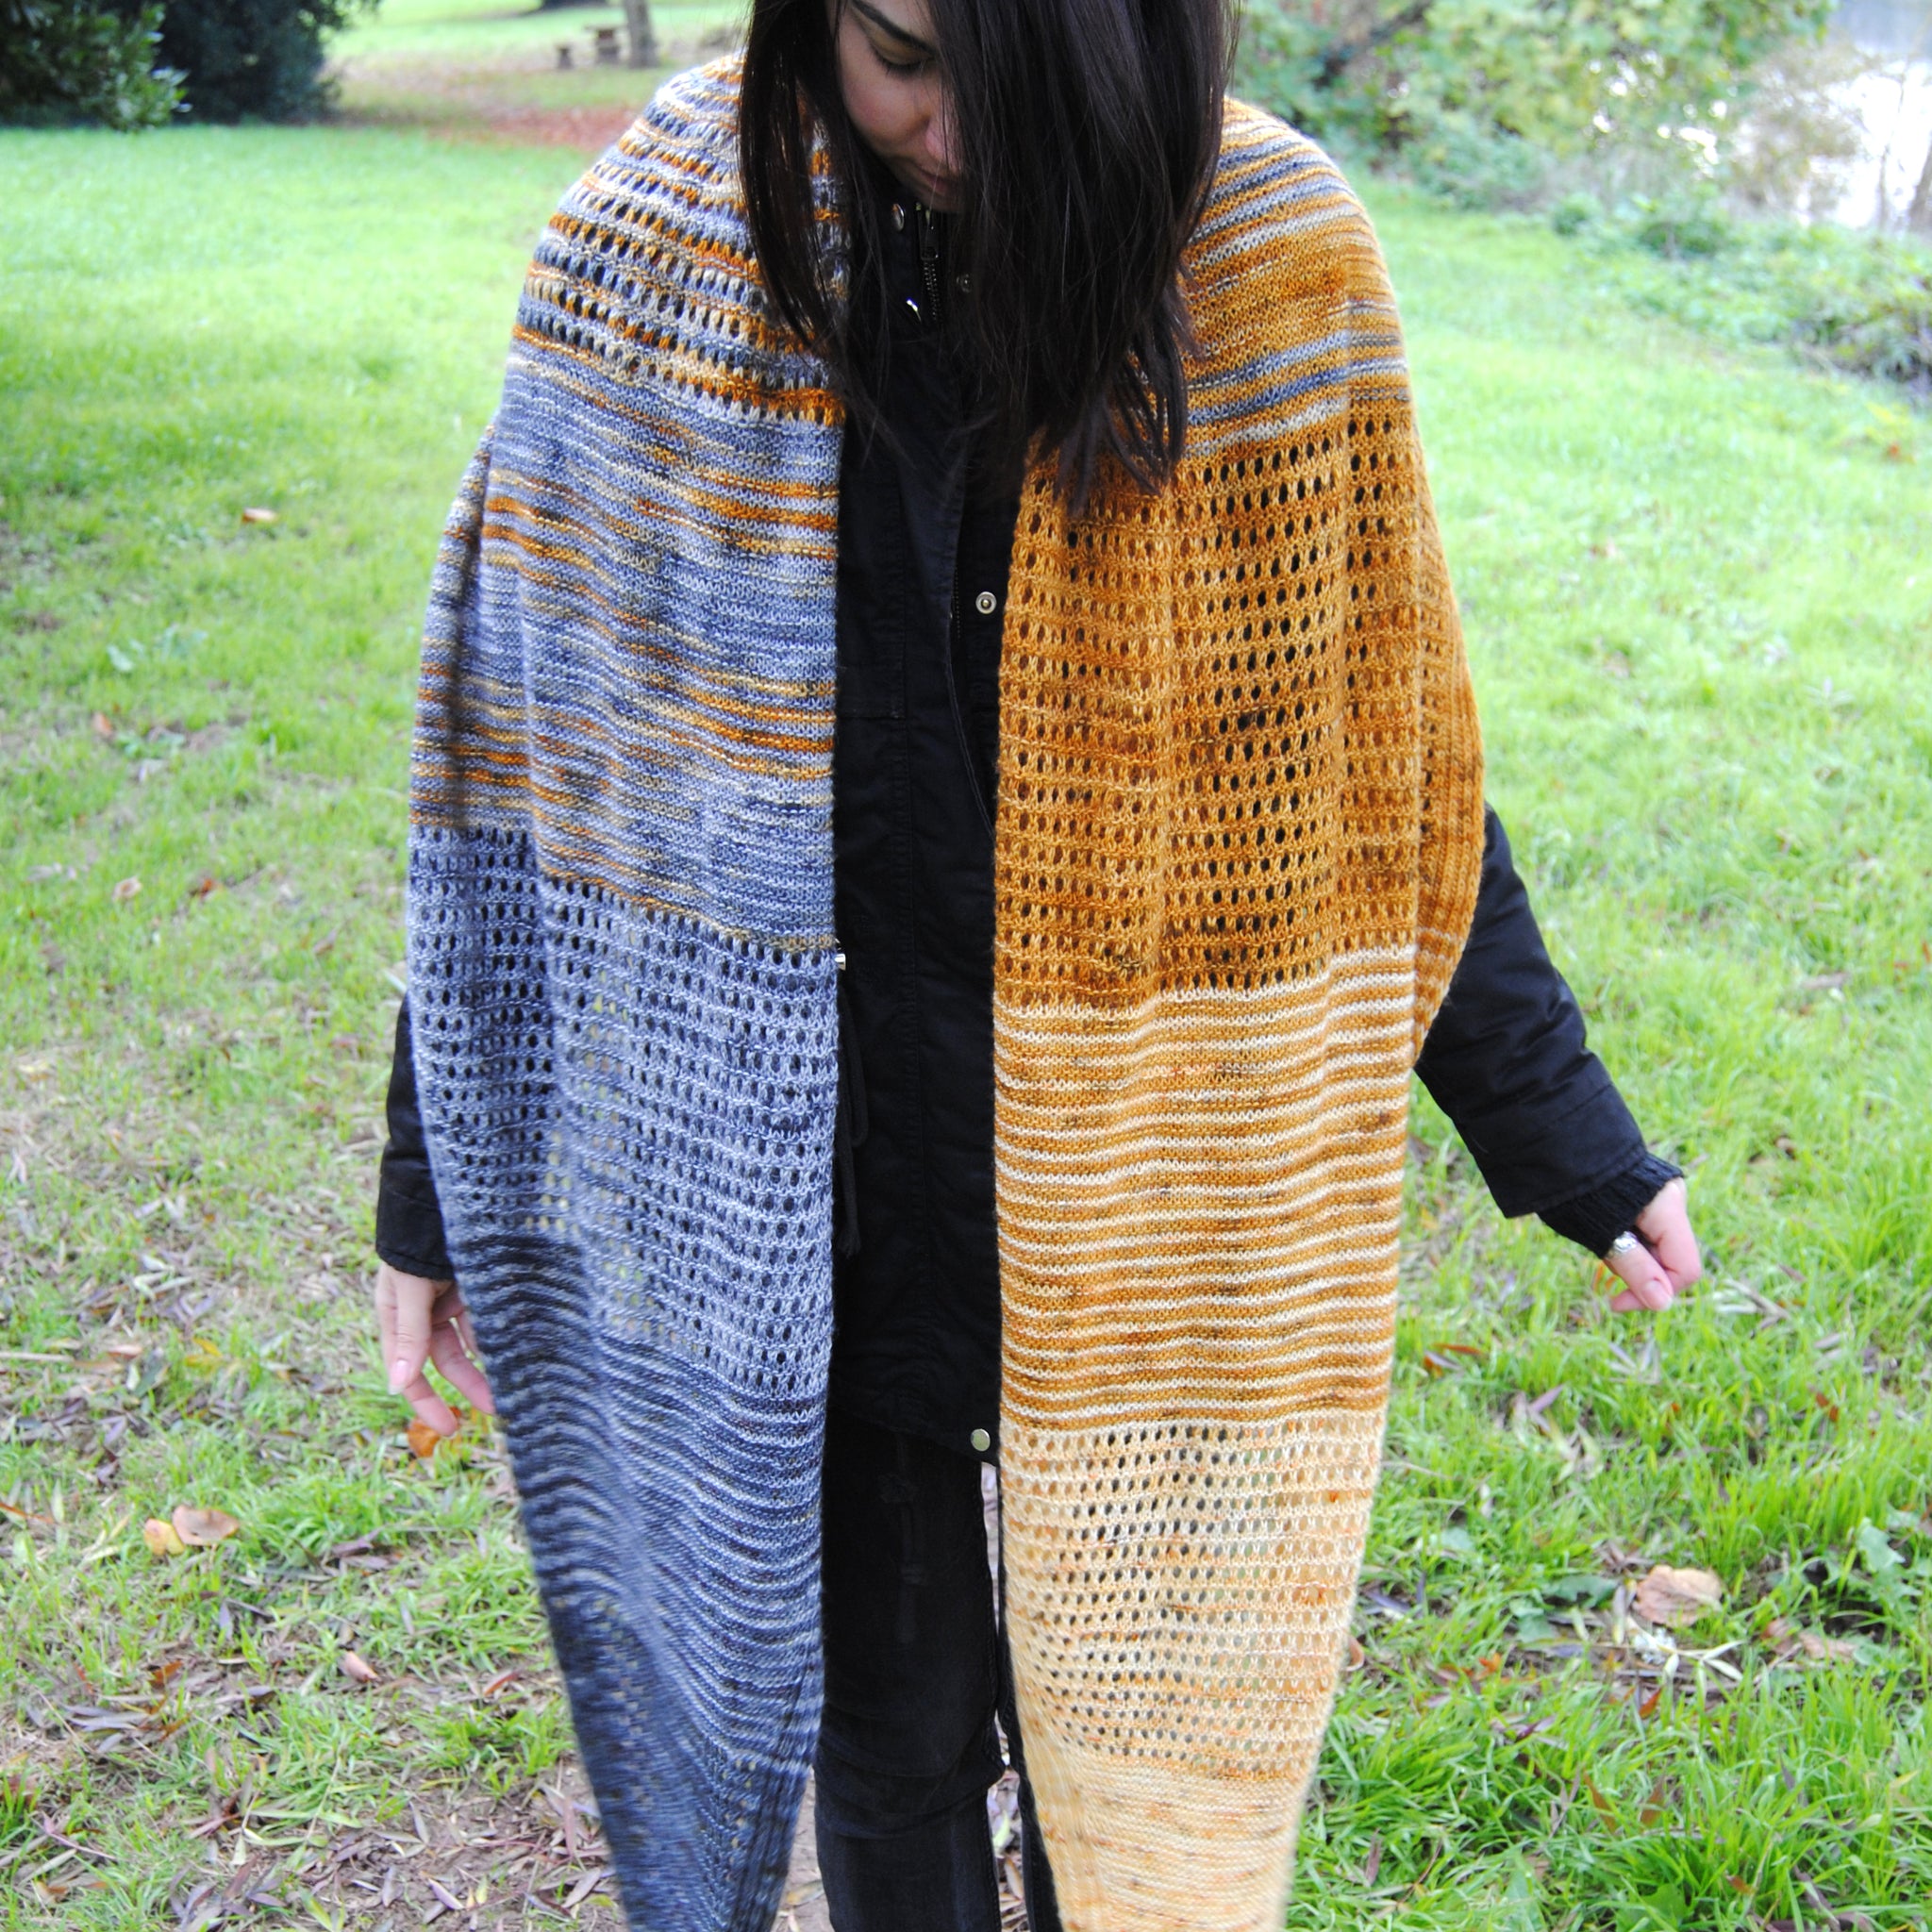 Moon cloud shawl set "Lallybroch" size Large - Artemis single